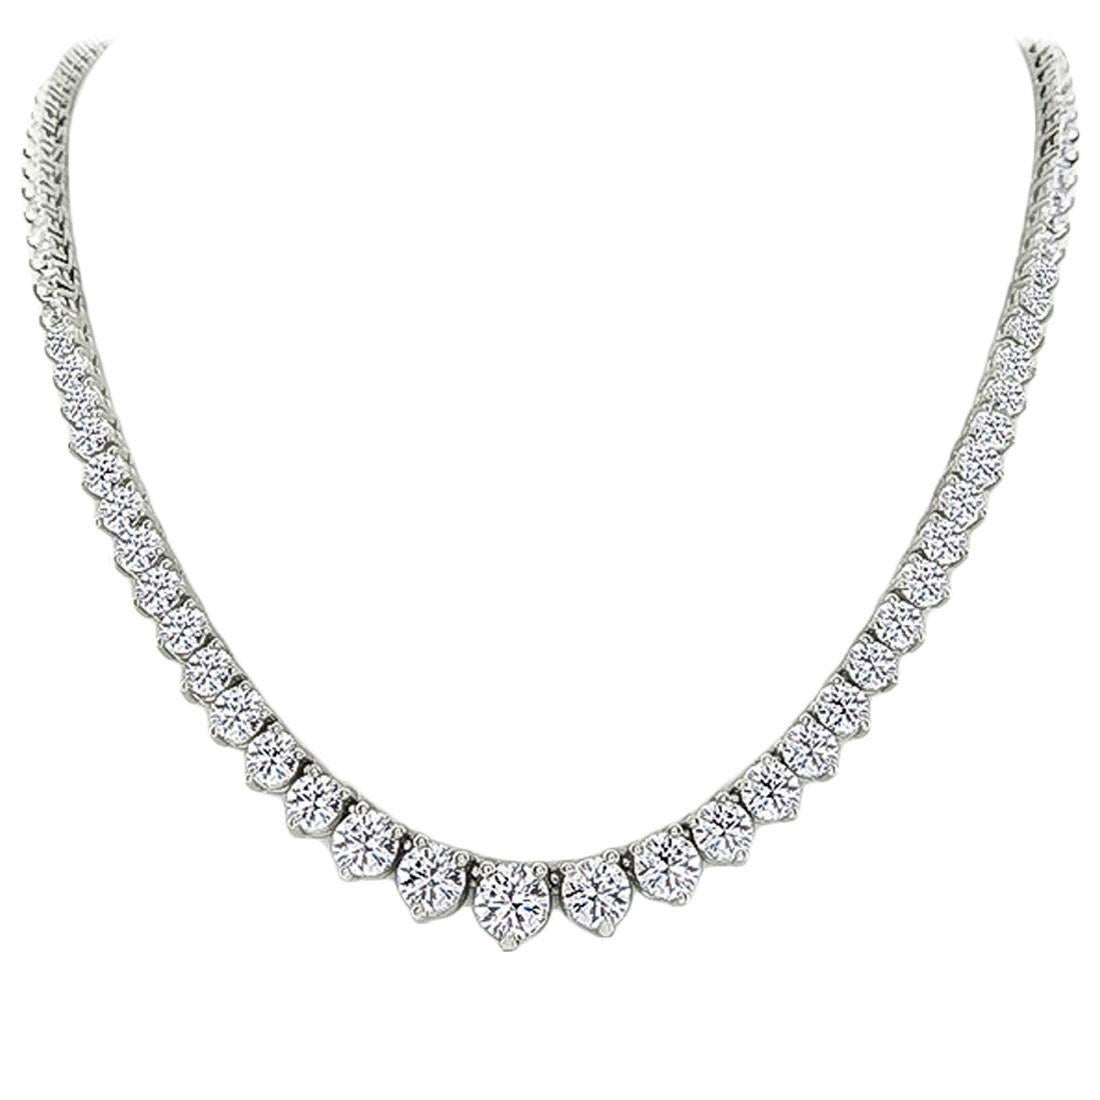 Stunning 26.10 Carats Diamond Gold Riviere Tennis Necklace 